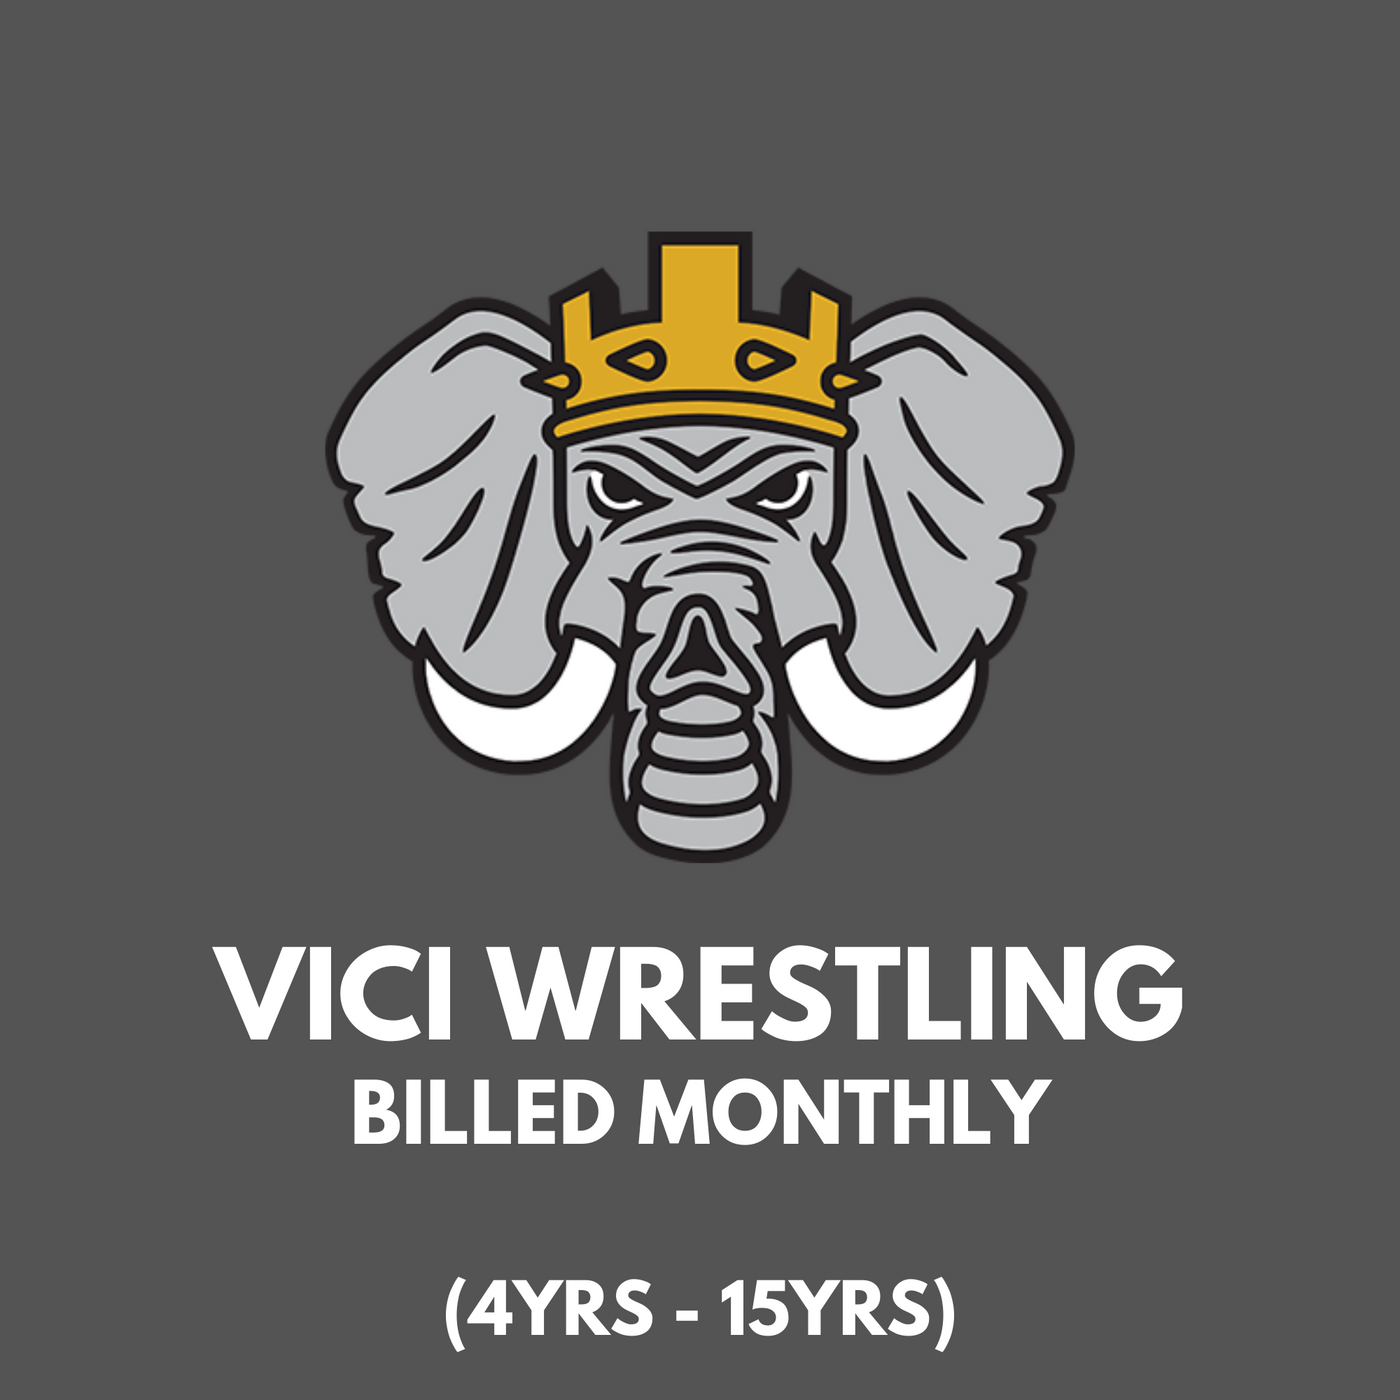 Vici Wrestling 2 Days per Week